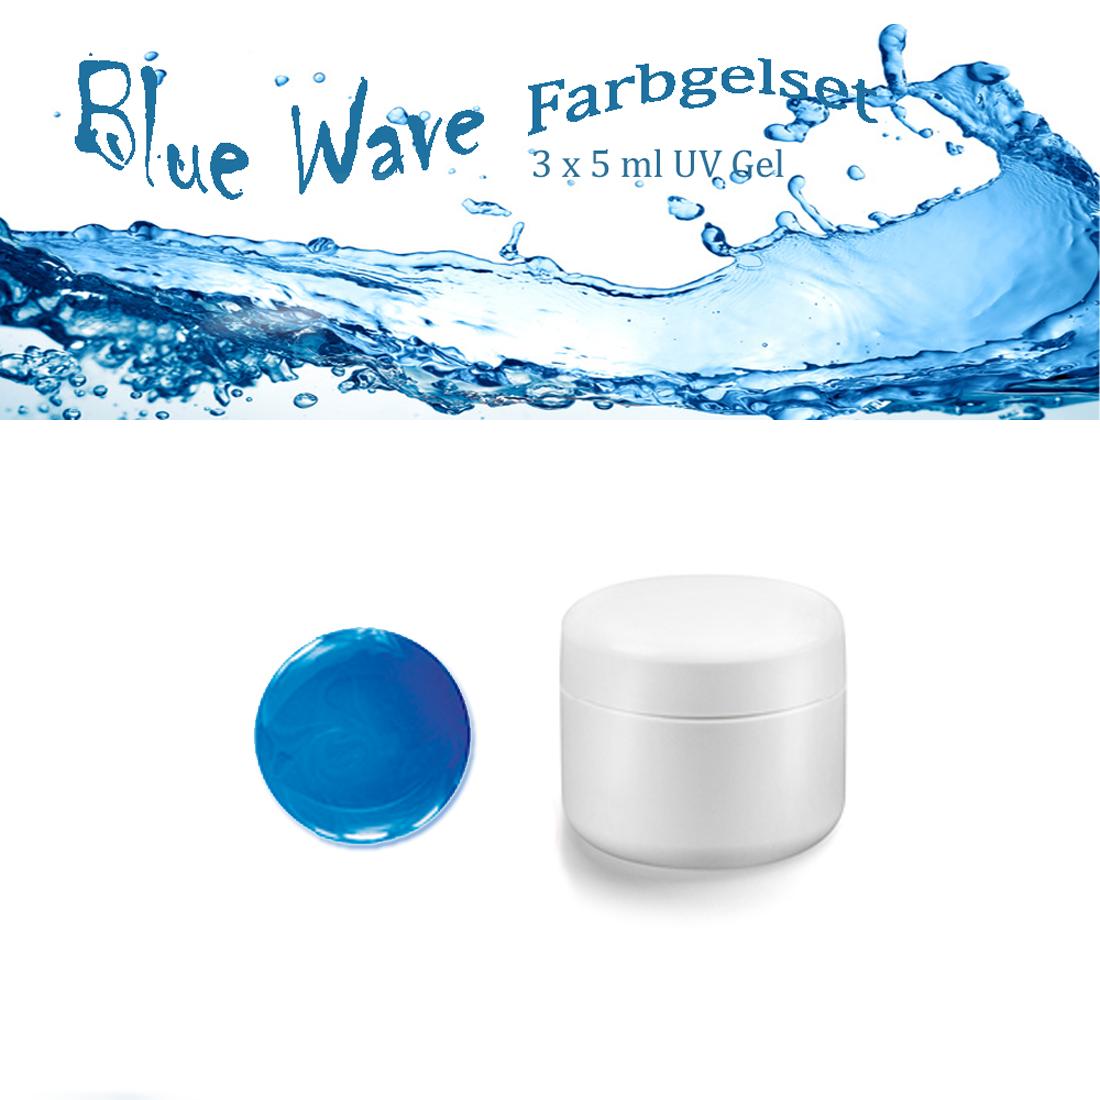 BLUE WAVE Farbgelset 3 x 5 ml